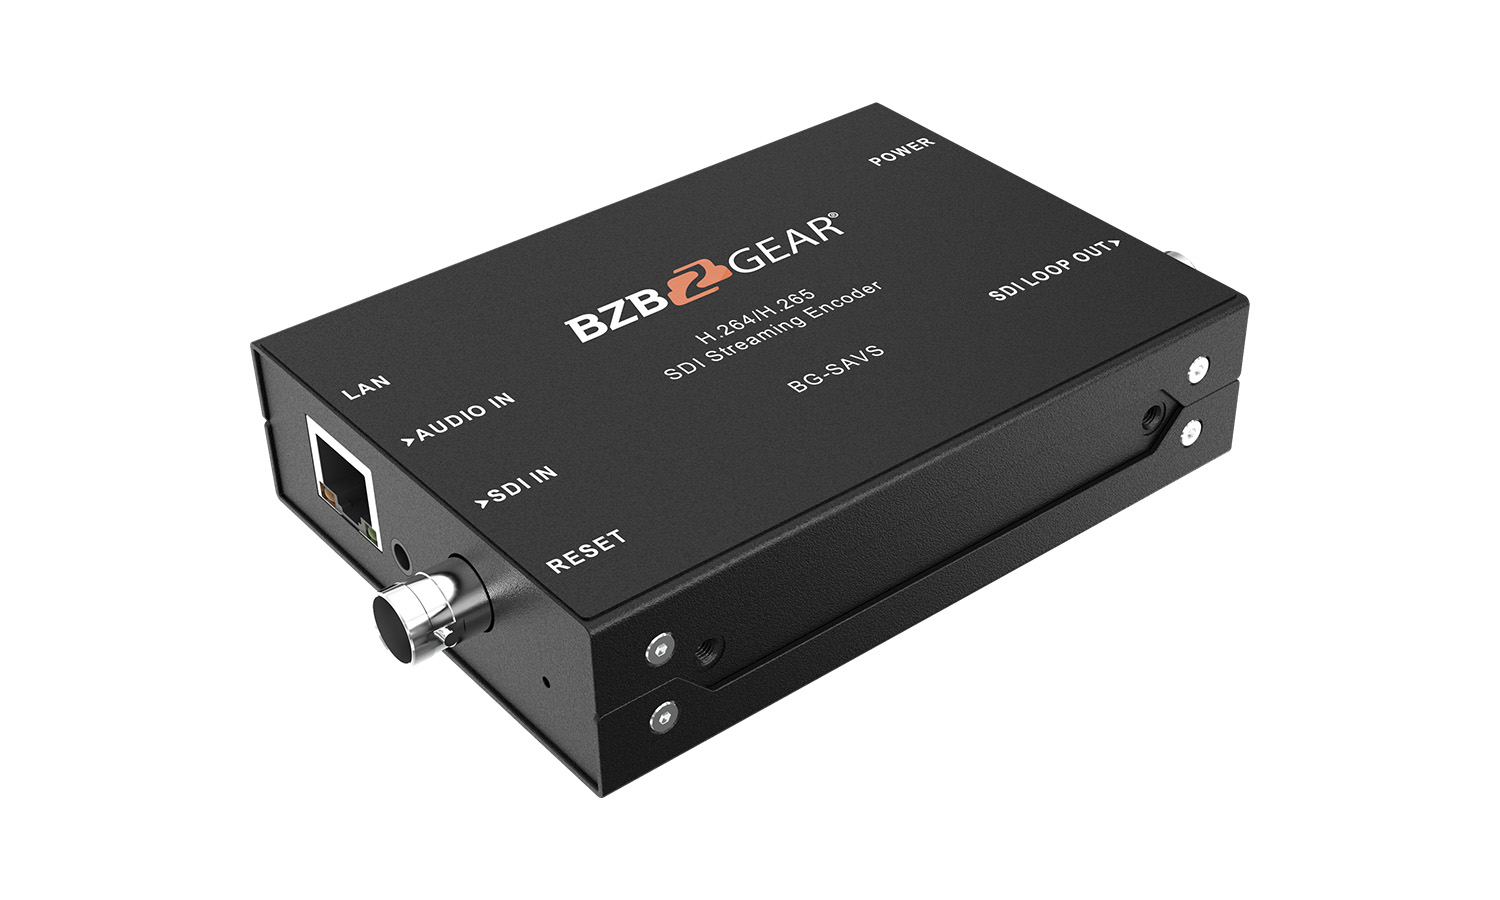 BG-SAVS 1080P H.264/265 SDI Video and Audio Streaming Encoder by BZBGEAR